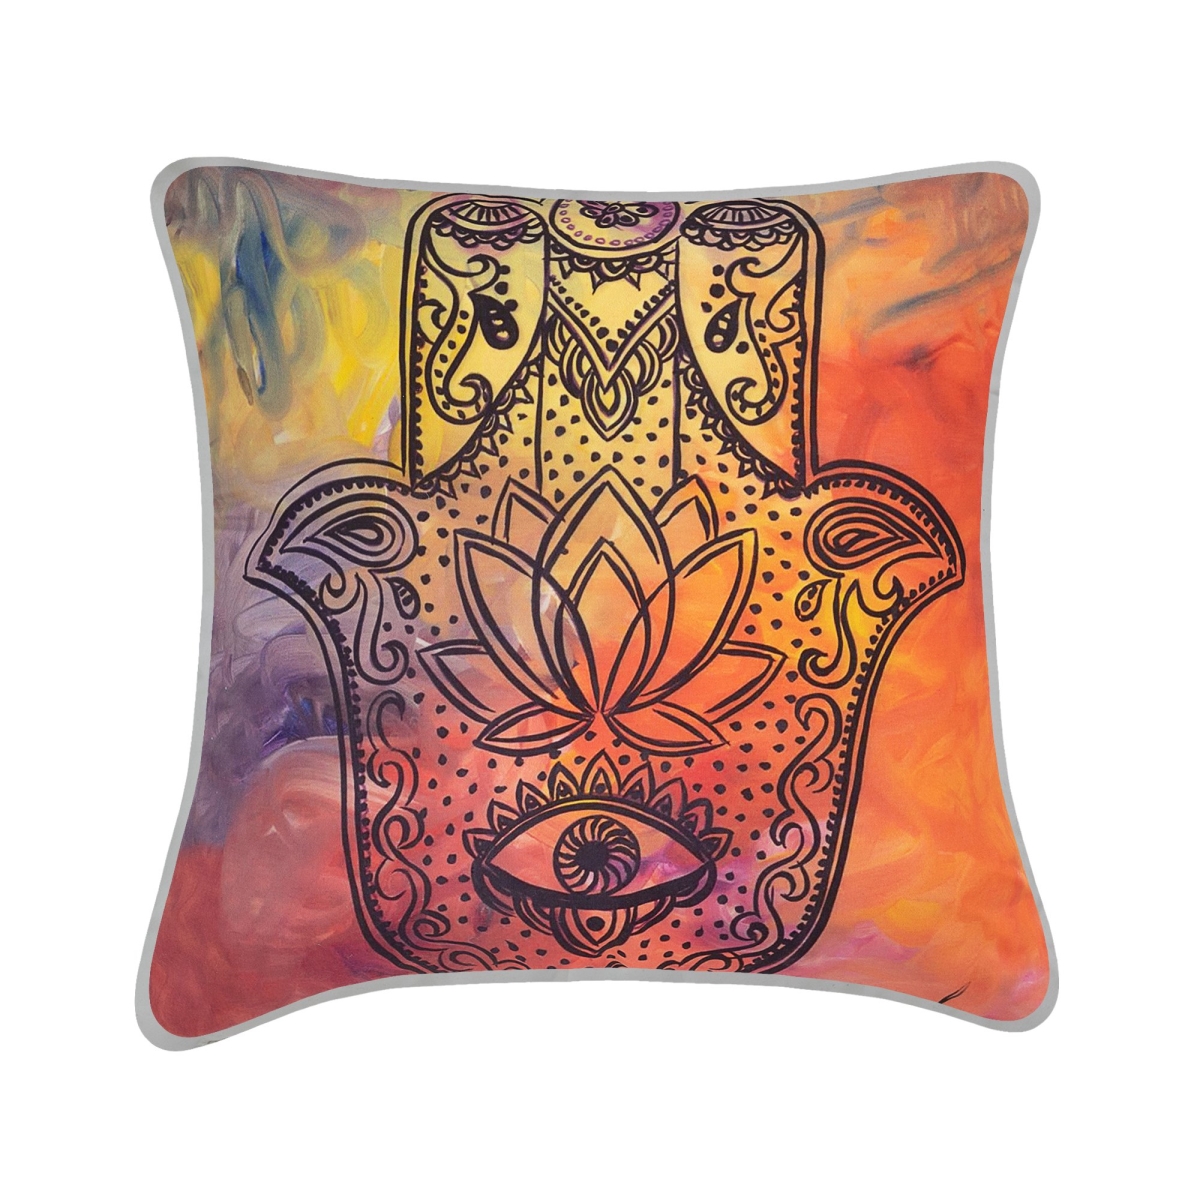 Sq-pi-jg-hams-1818 18 X 18 In. Jessica Gorlicky Hamsa Decorative Cushion - 100 Percent Polyester